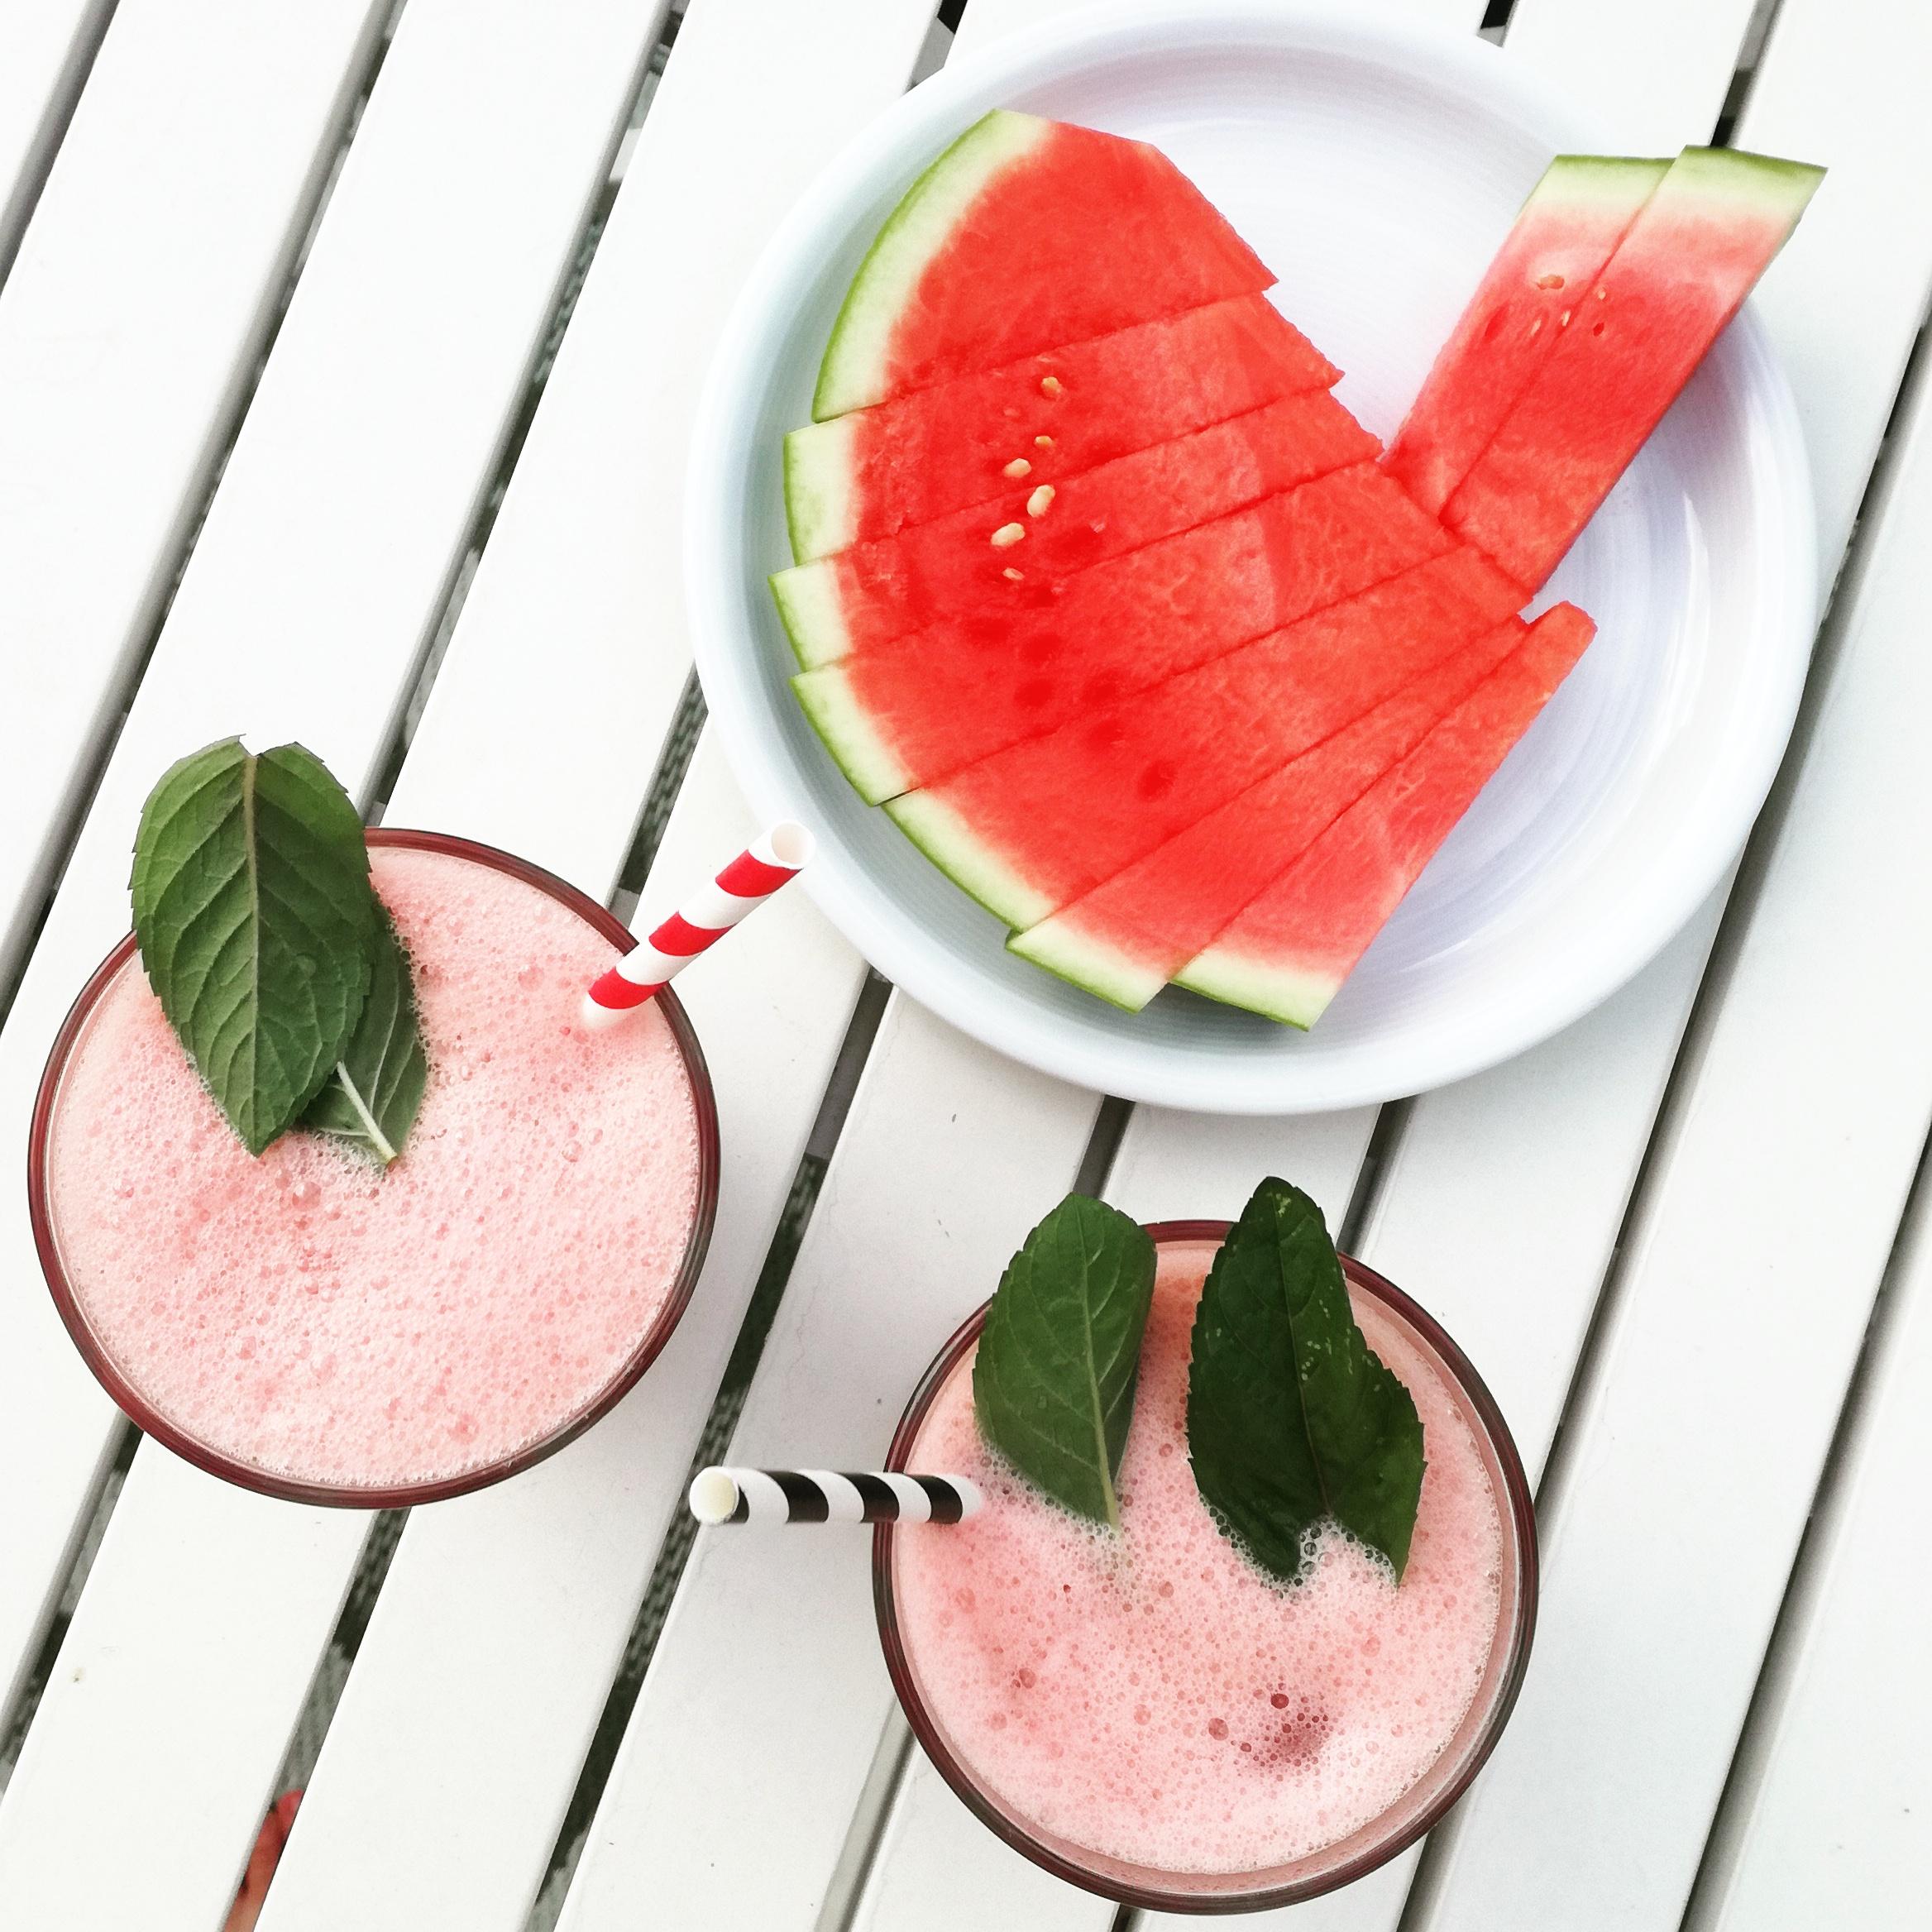 Perfect Summer 🌿
#watermelonlover #vegantreats #freshfruit #summer #watermelon 